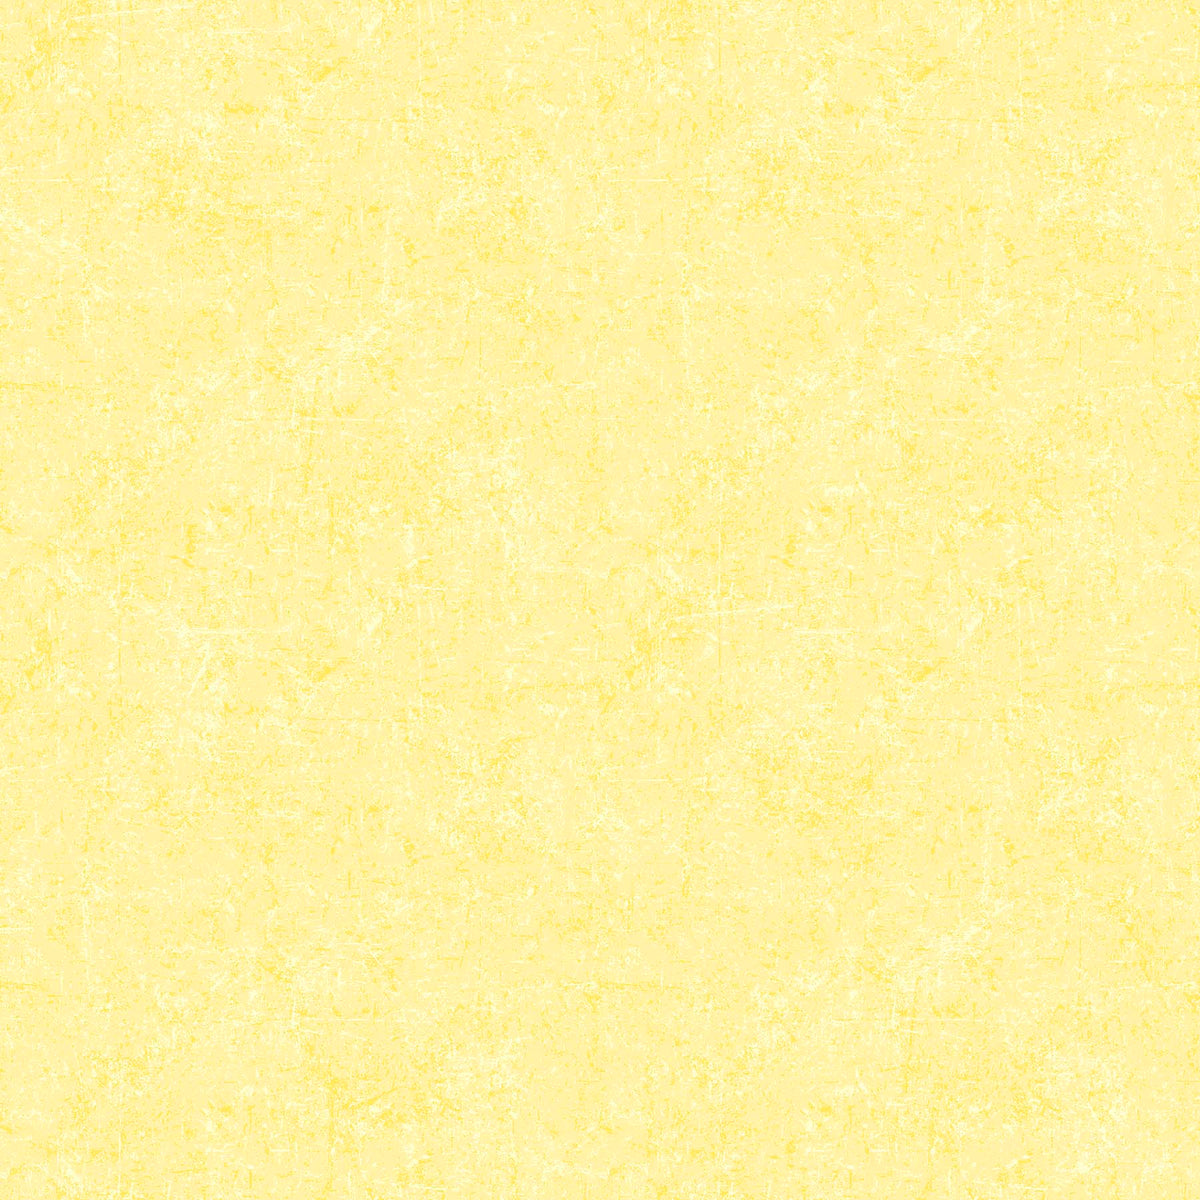 Glisten Sorbet Quilt Fabric - Blender in Lemonade Yellow - P10091-50